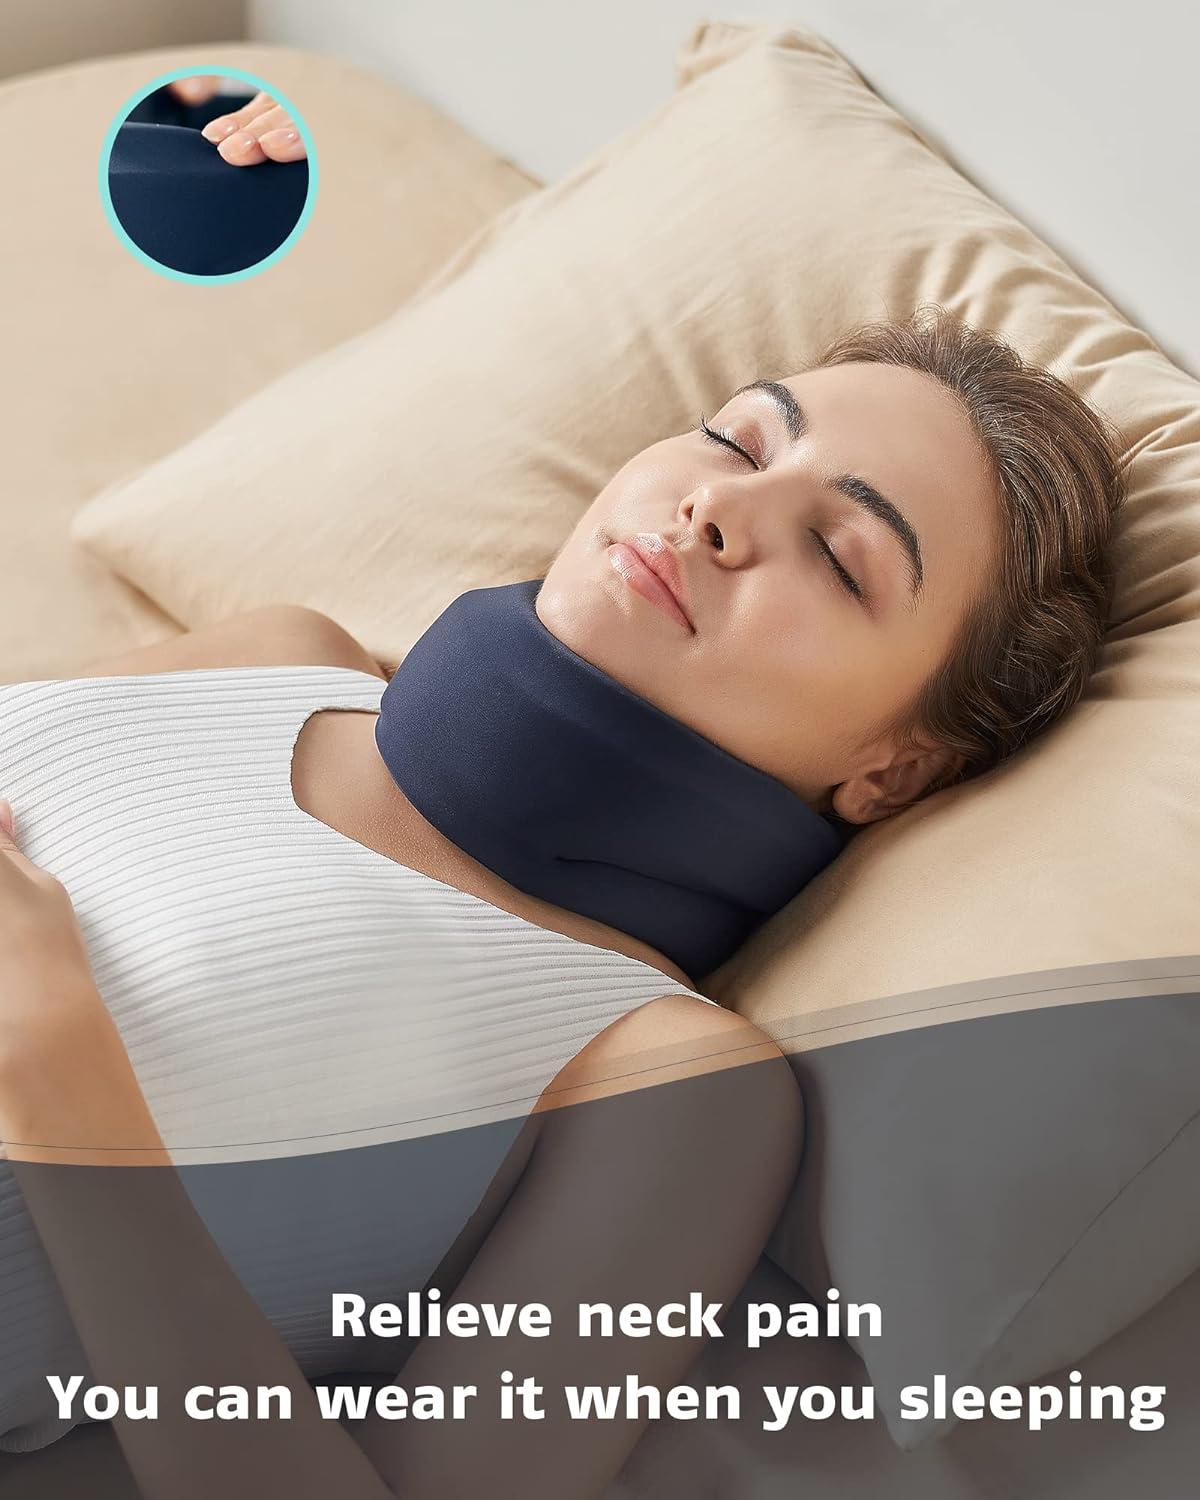 BLABOK Neck Brace for Neck Pain and Support - Soft Foam Cervical